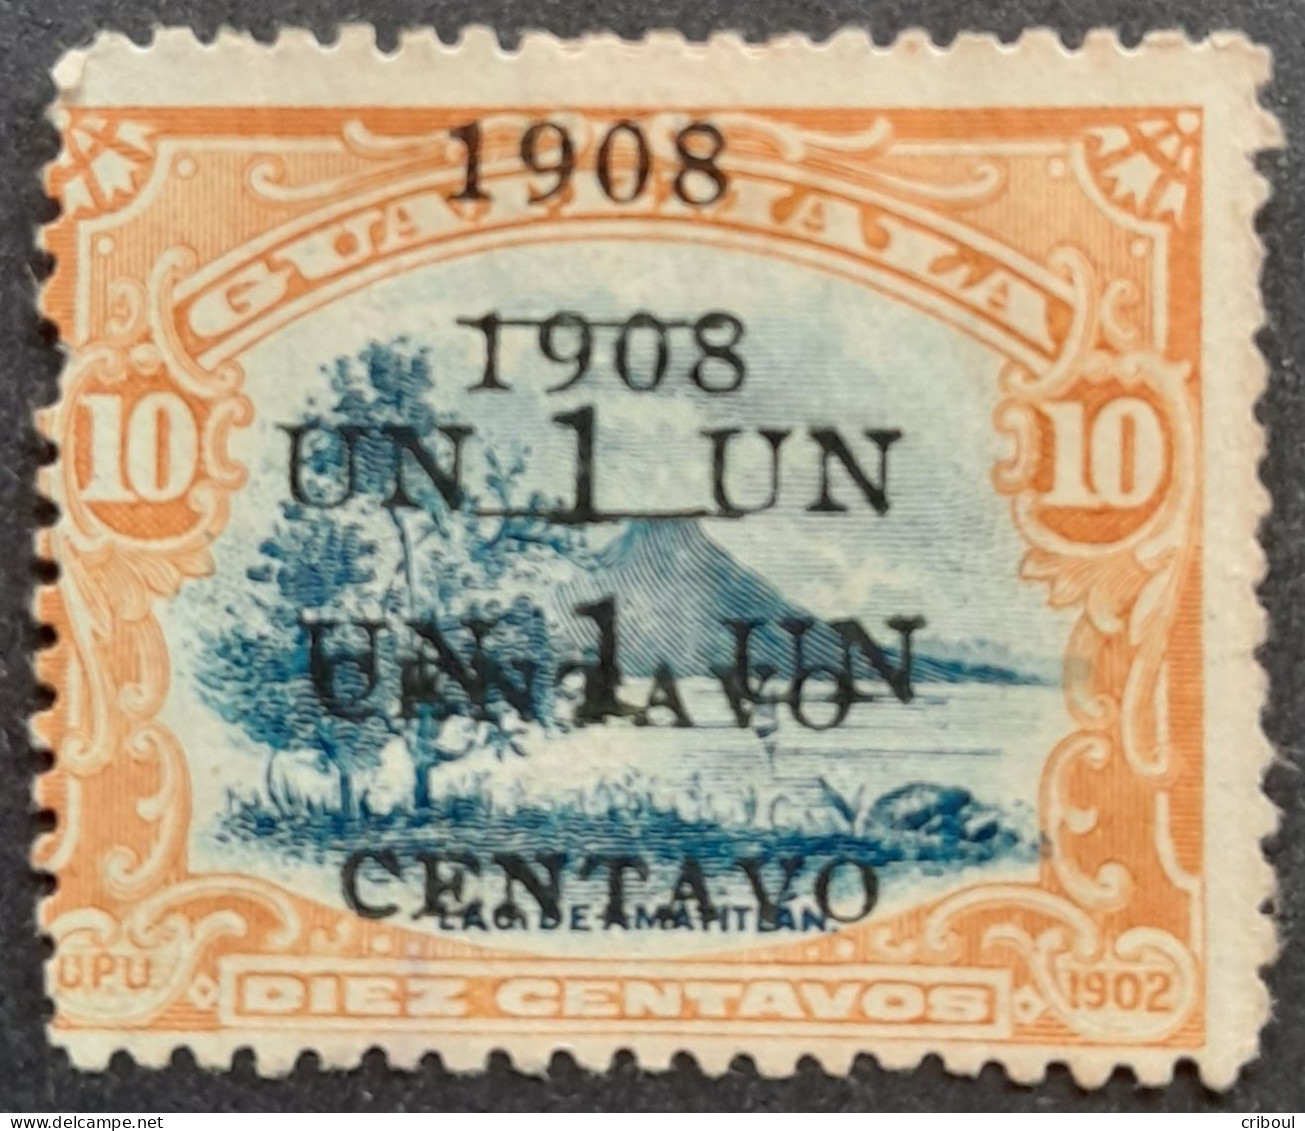 Guatemala 1908 Lac Lake Amatitlan Double Surcharge Overprint UN CENTAVO Yvert 138a (*) MNG - Fouten Op Zegels